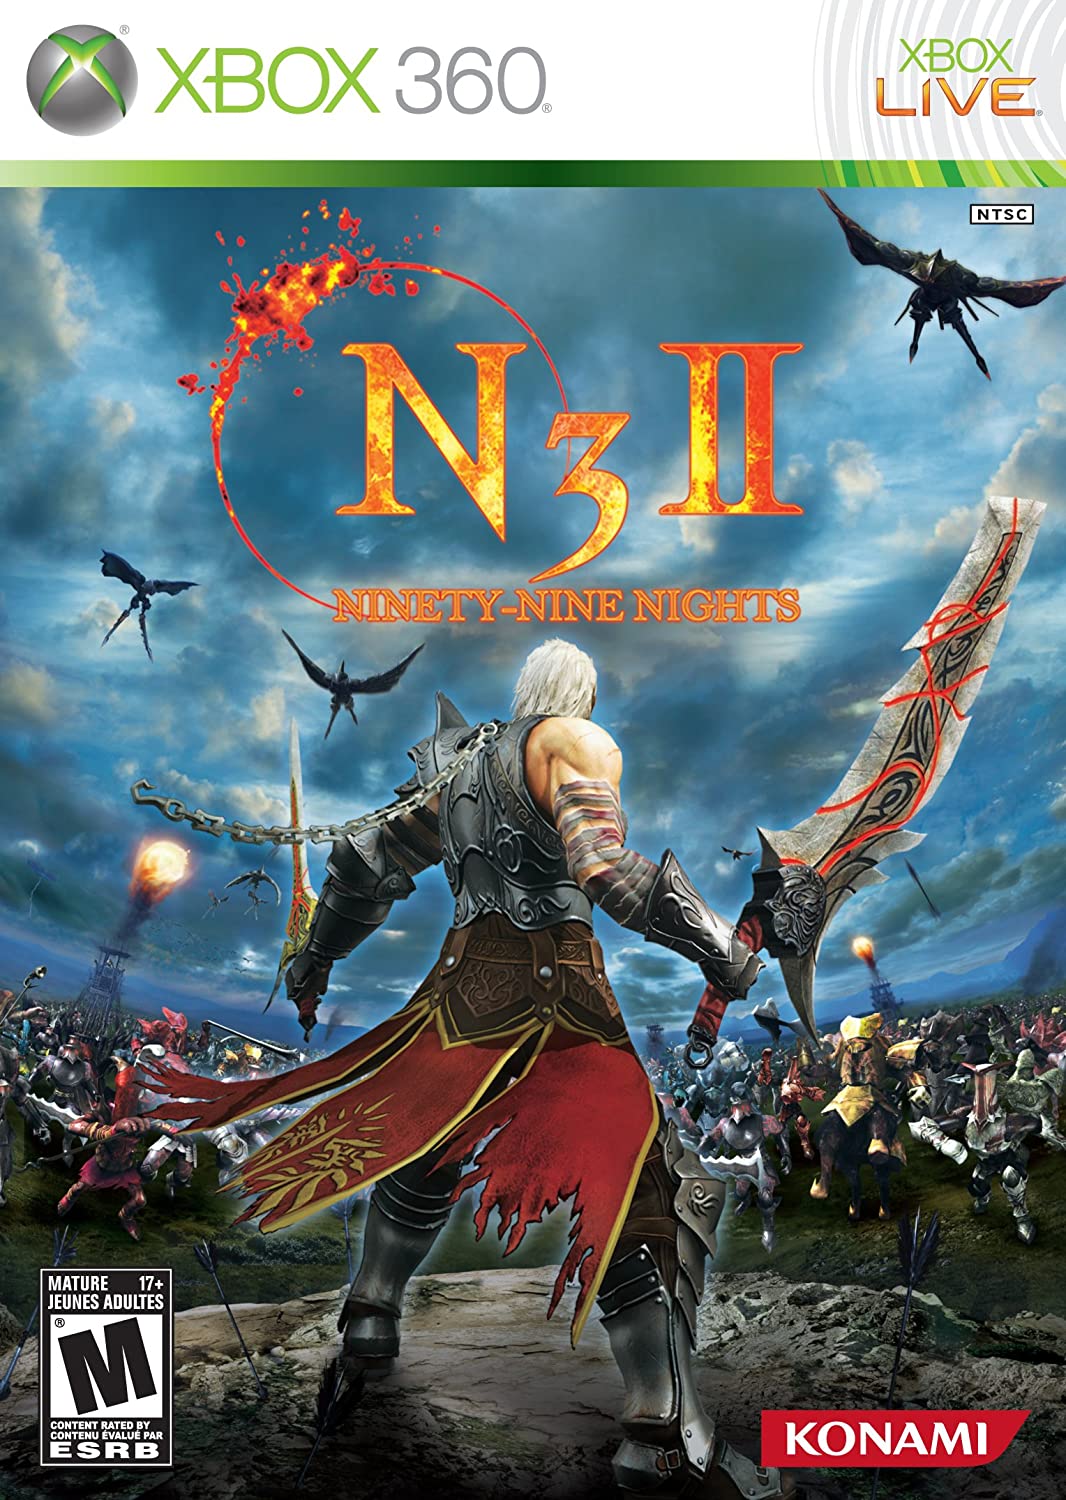 N3II: Ninety-Nine Nights player count stats